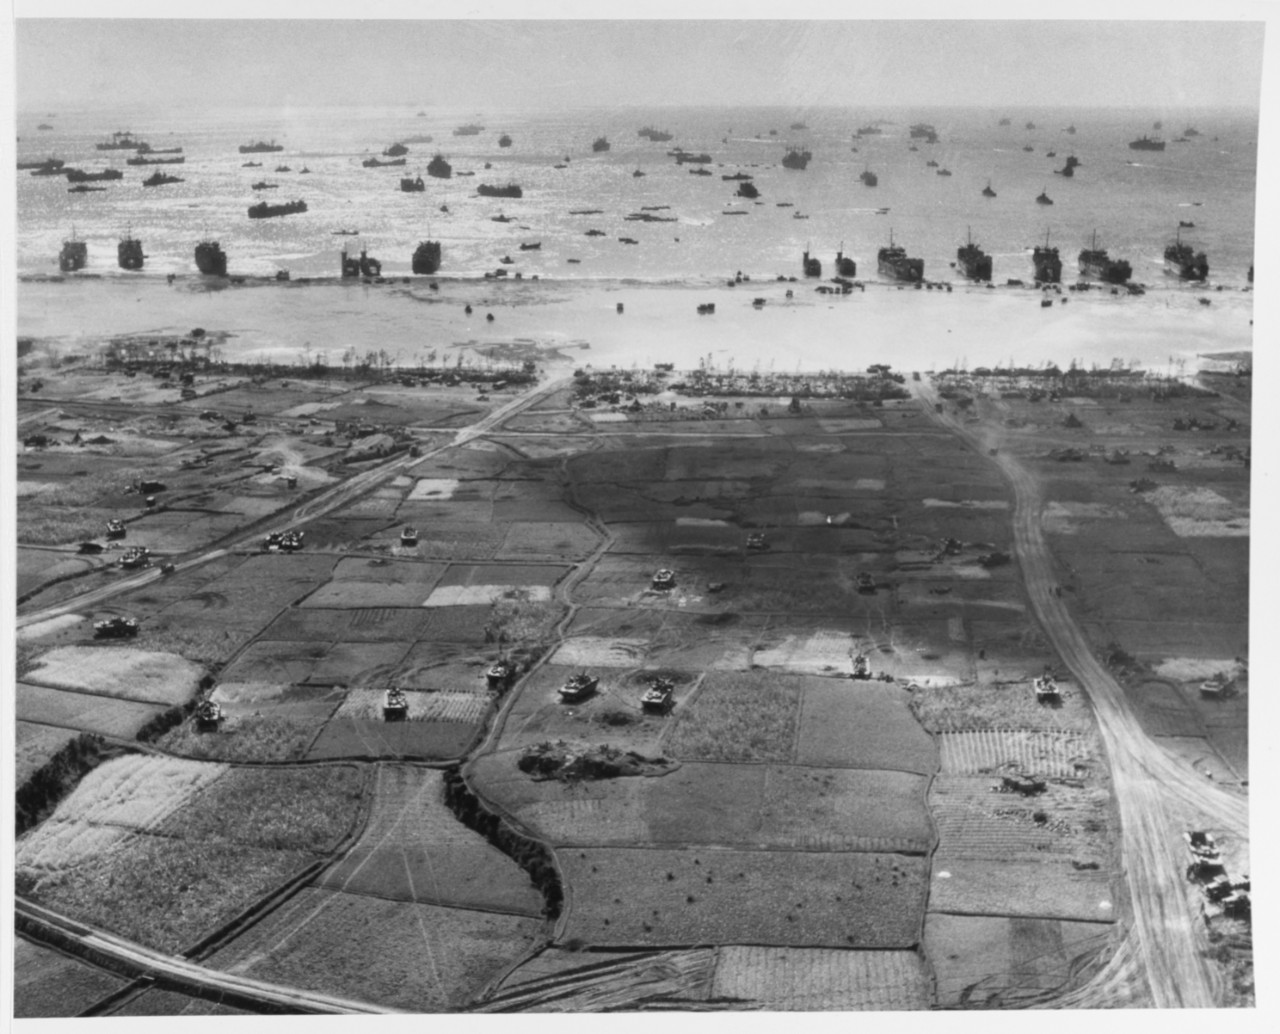 Okinawa Landings, April 1945